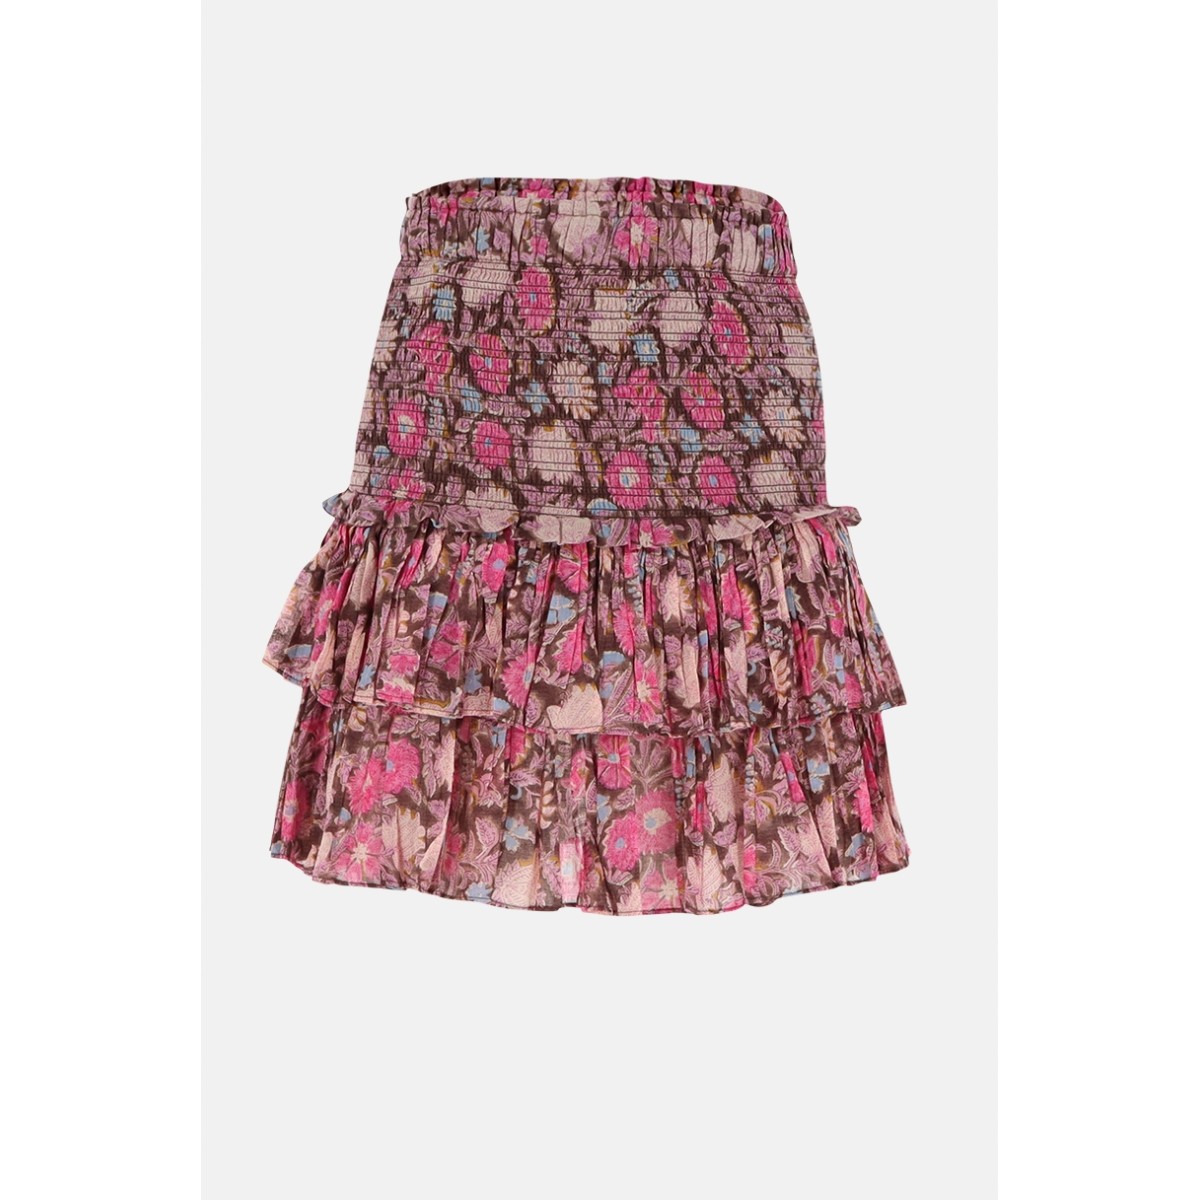 Marant Etoile "Naomi" Mini Skirt